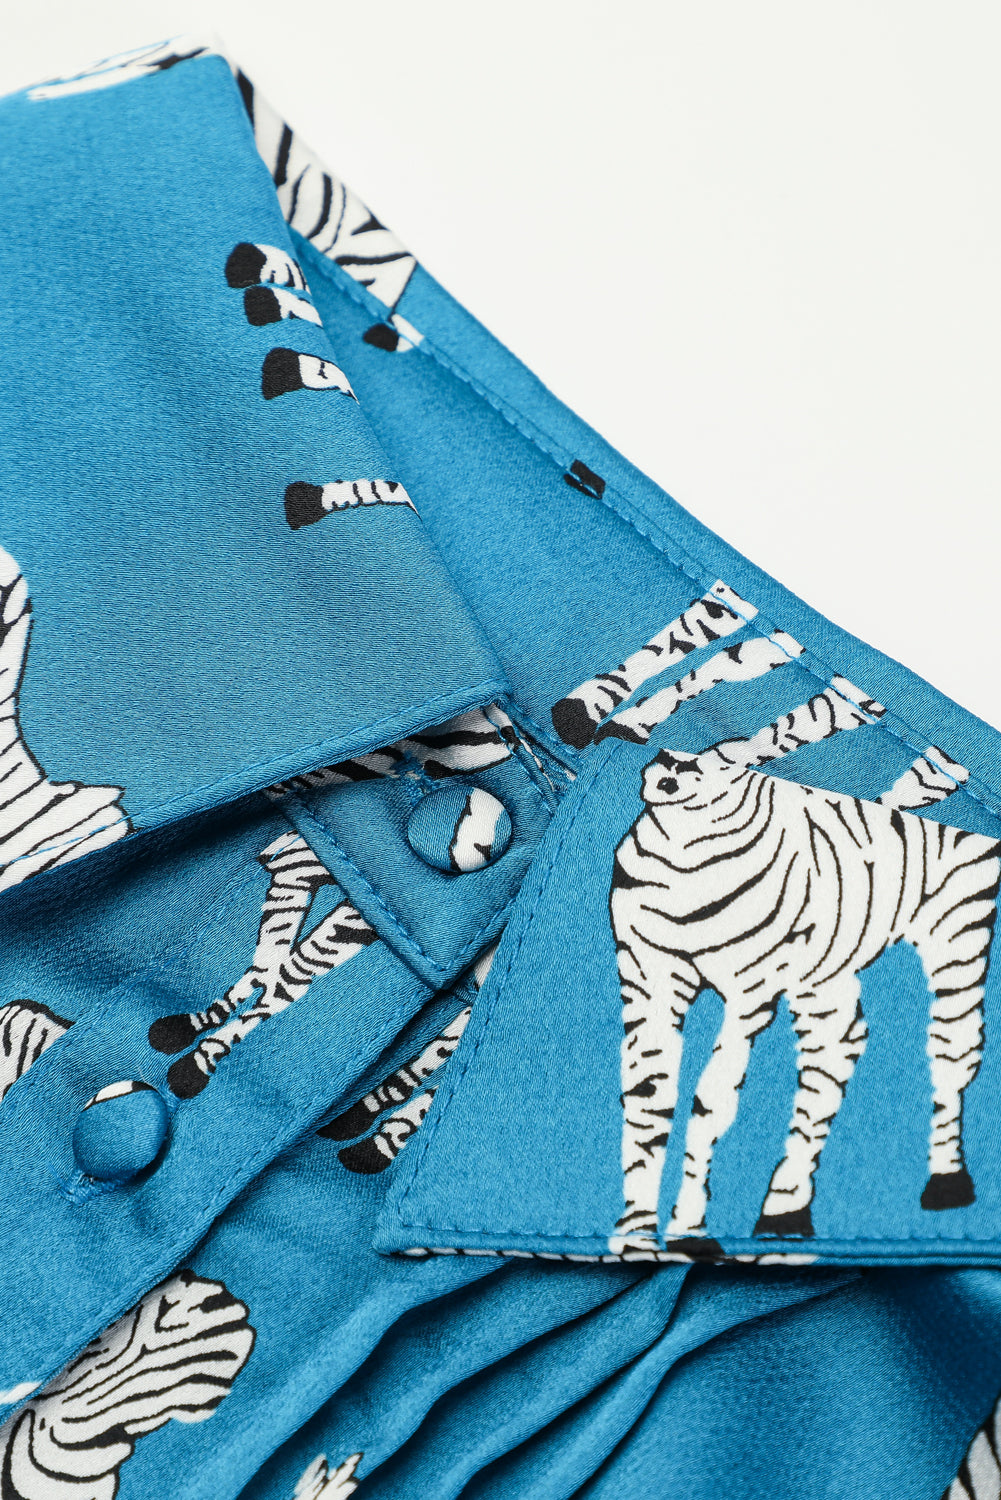 Blue Zebra Print Ruched Babydoll Dress